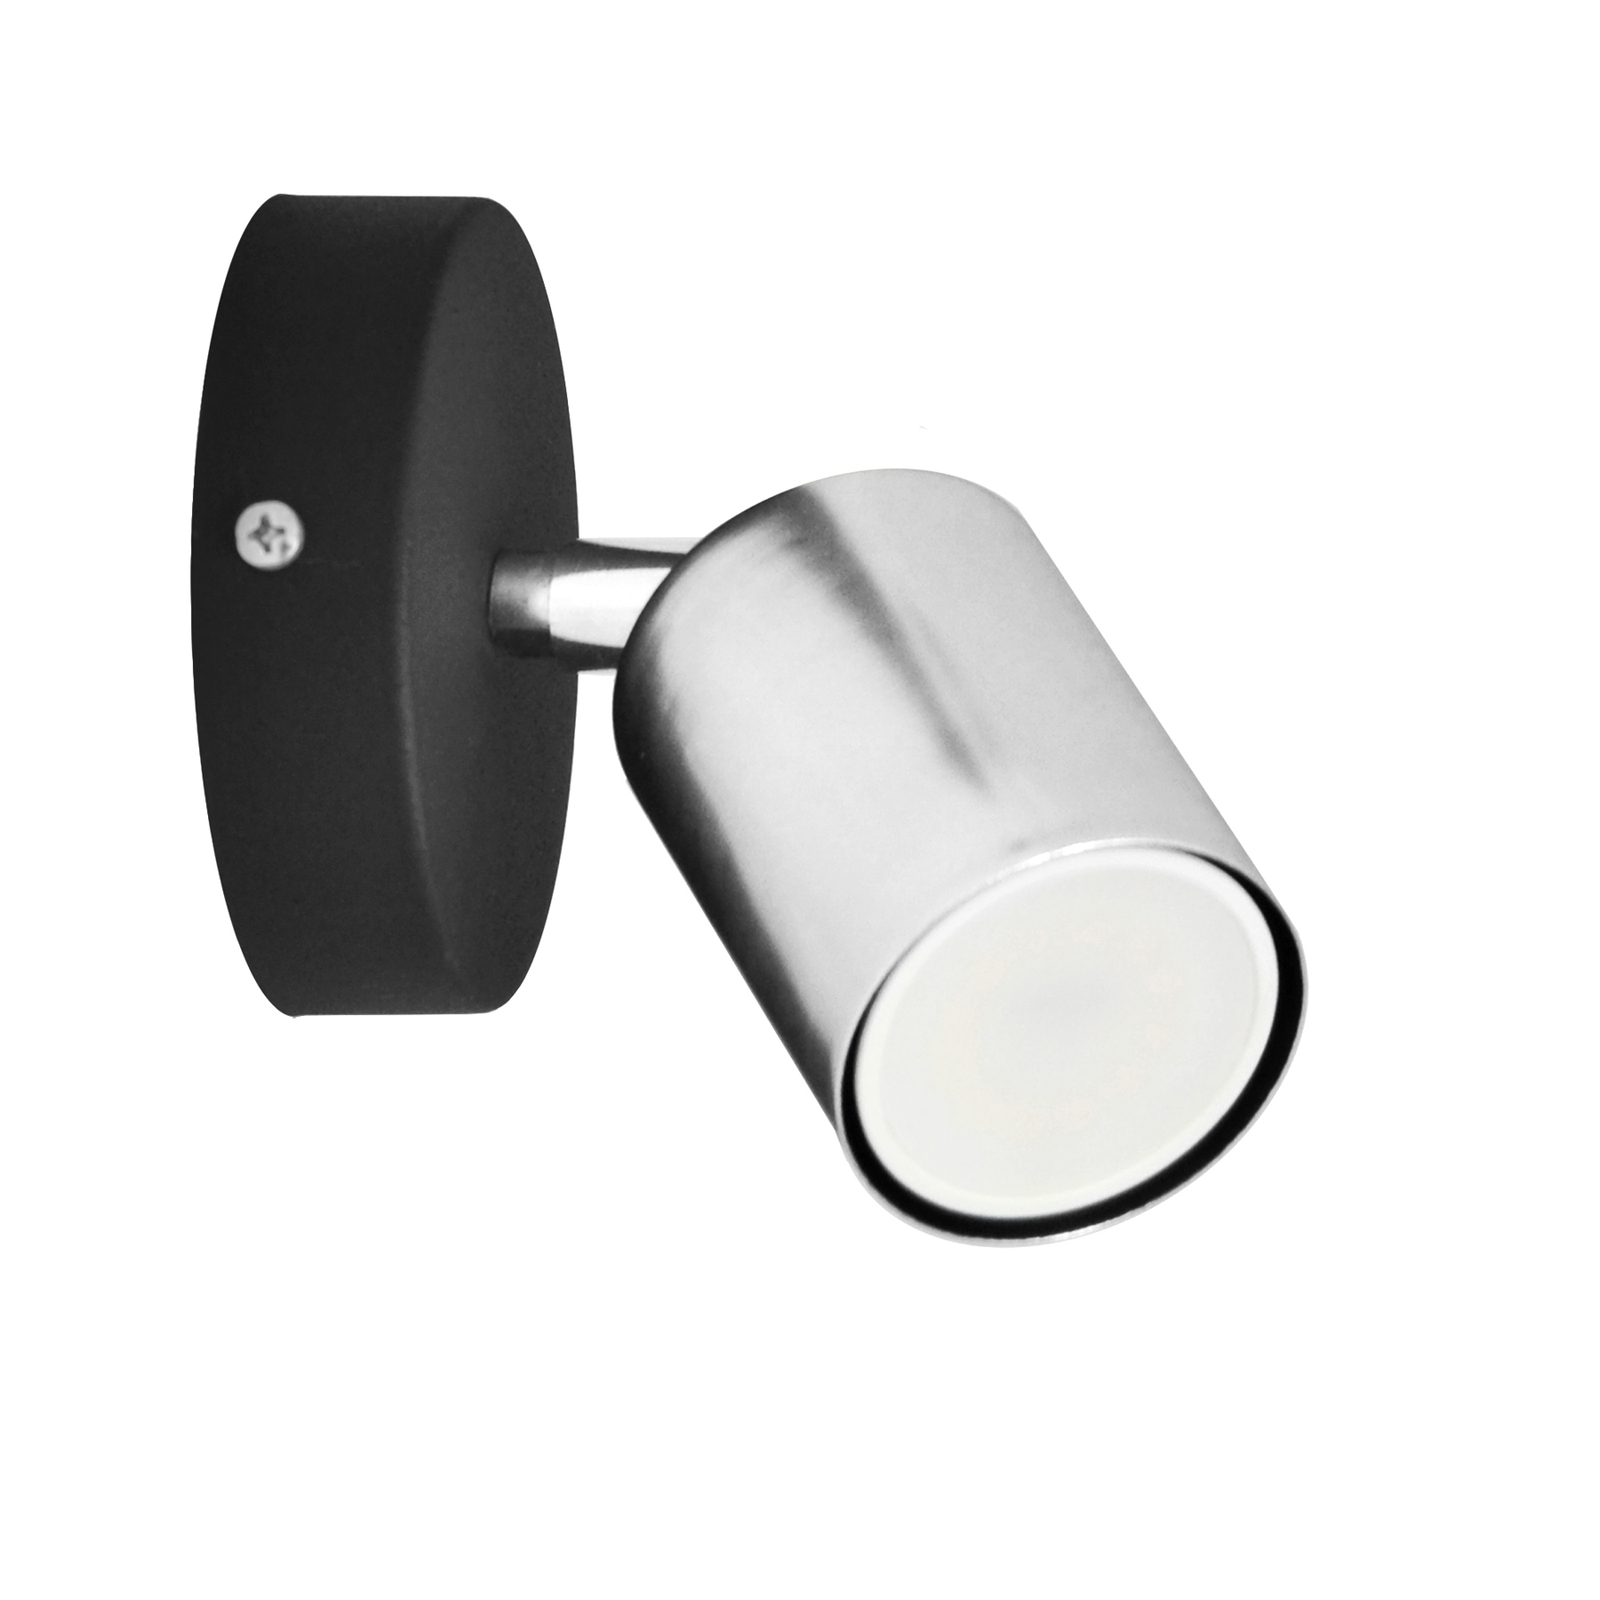 Tune II wall light, black/chrome, metal, E27, Ø 5.5 cm